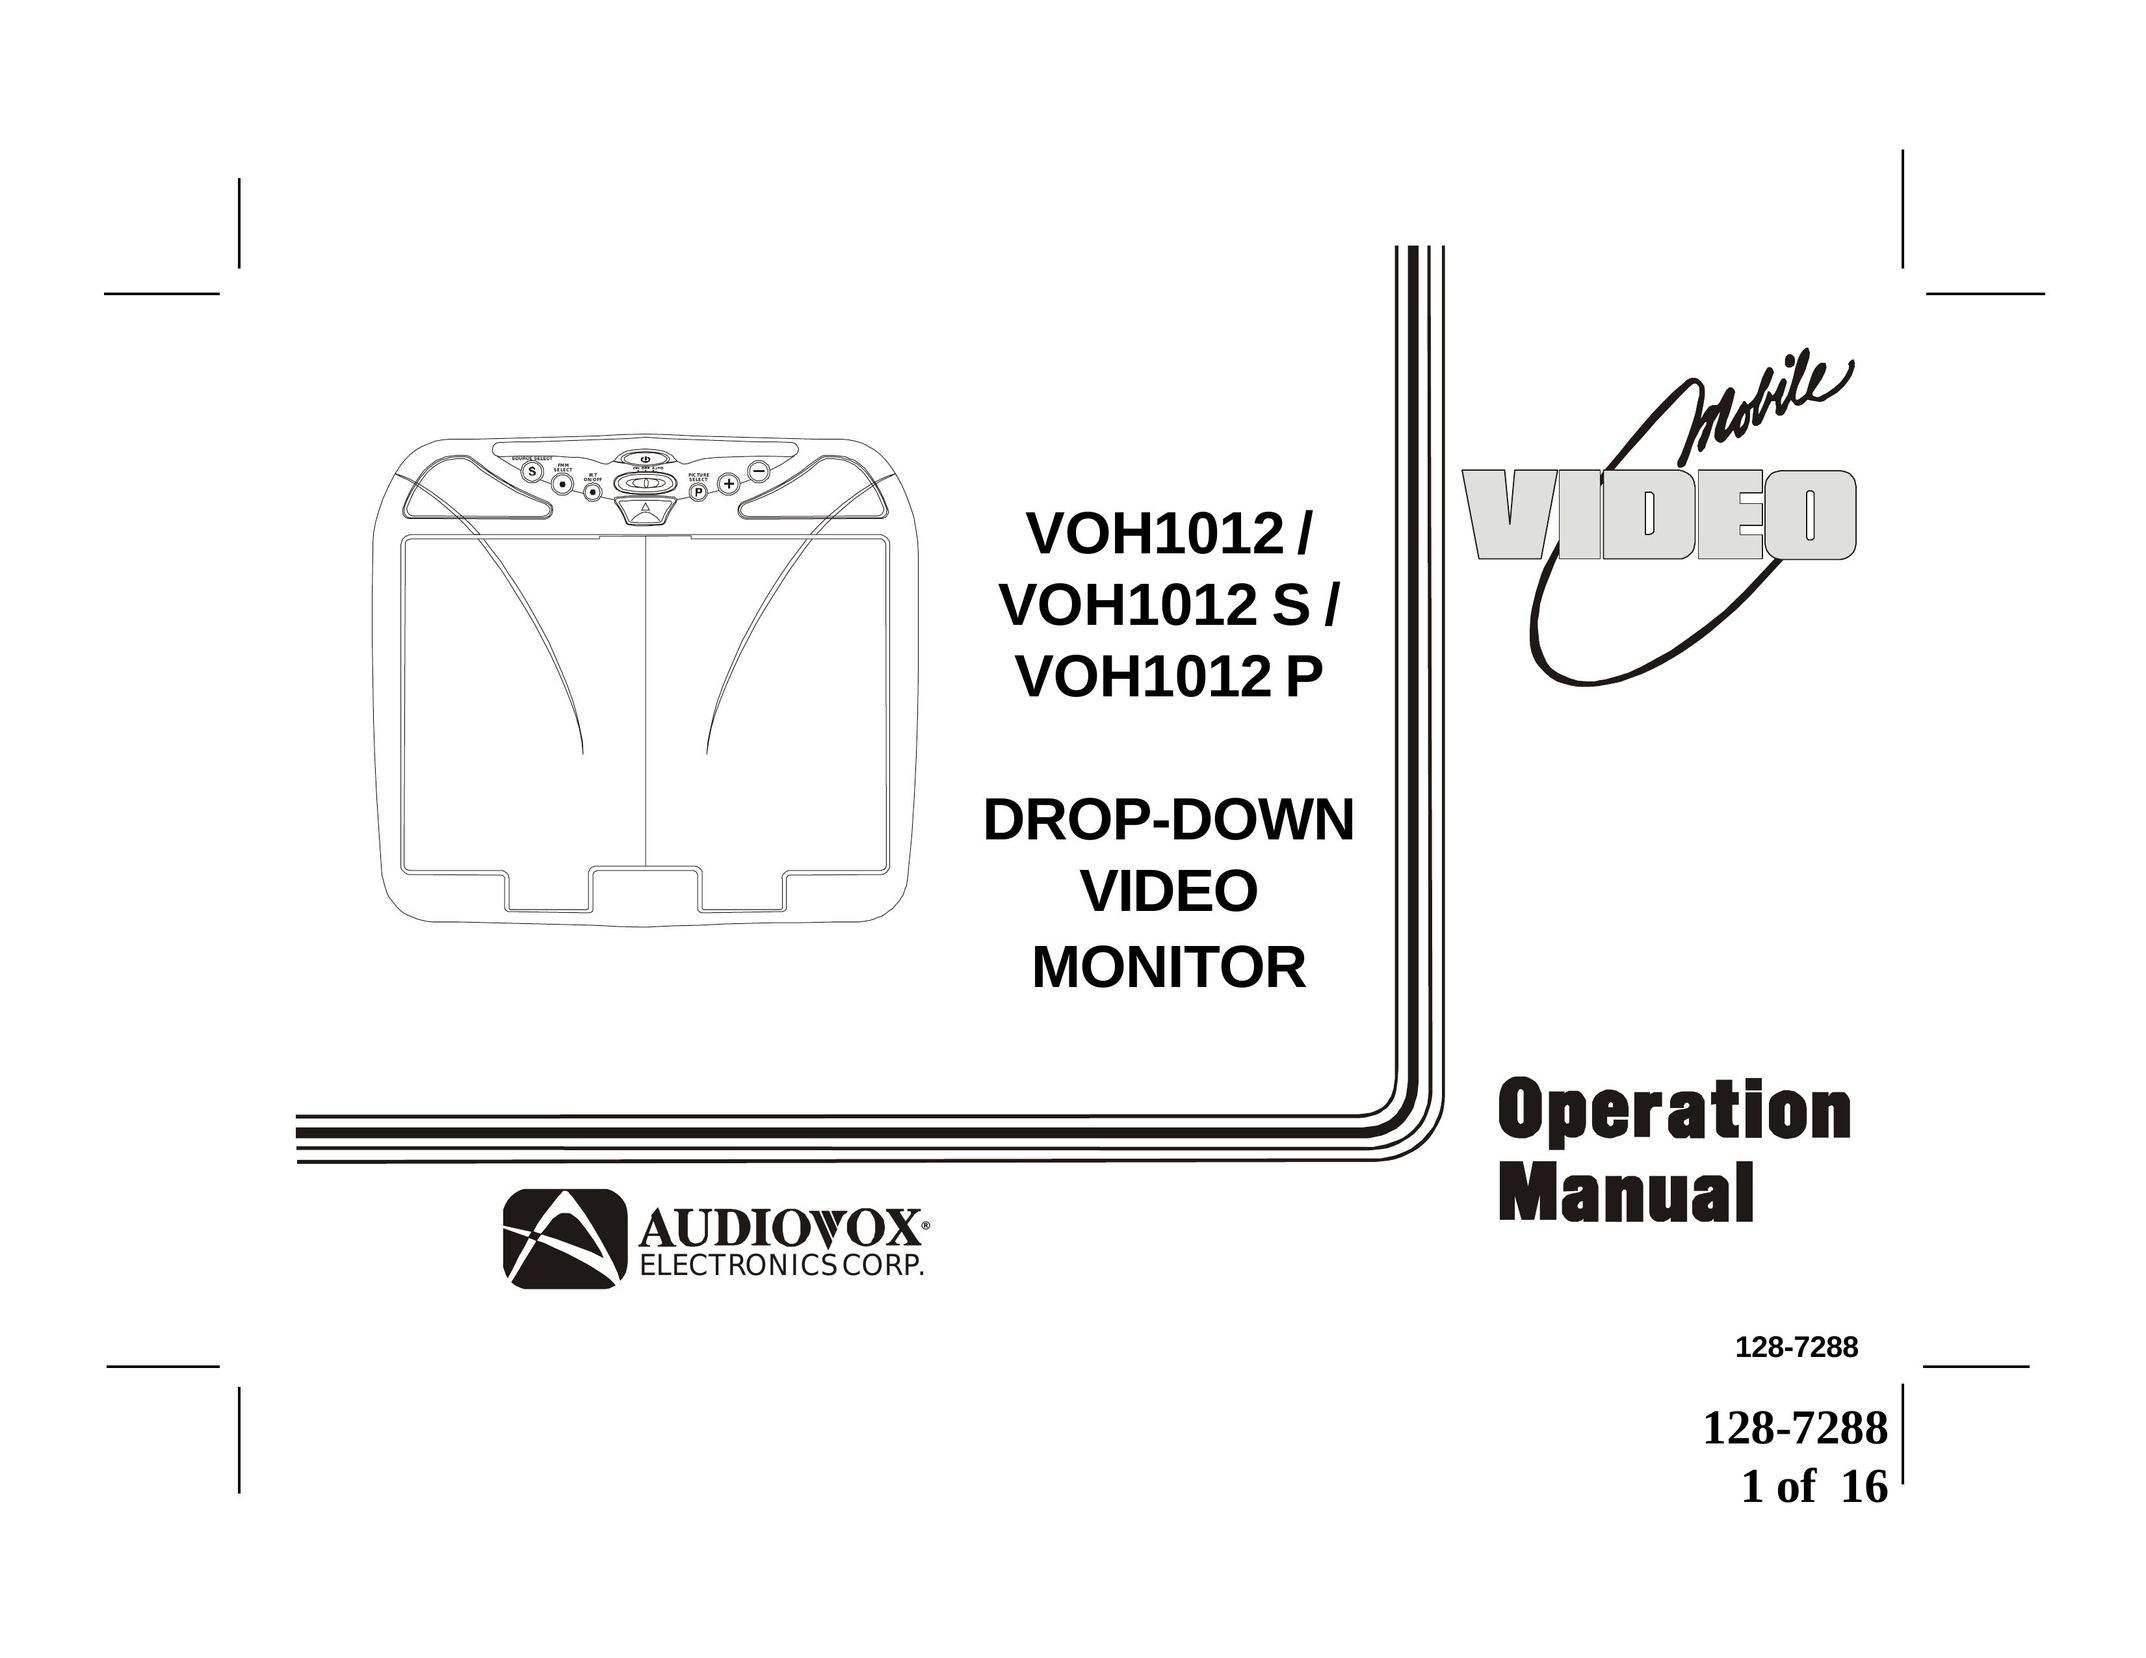 Audiovox VOH1012P Computer Monitor User Manual